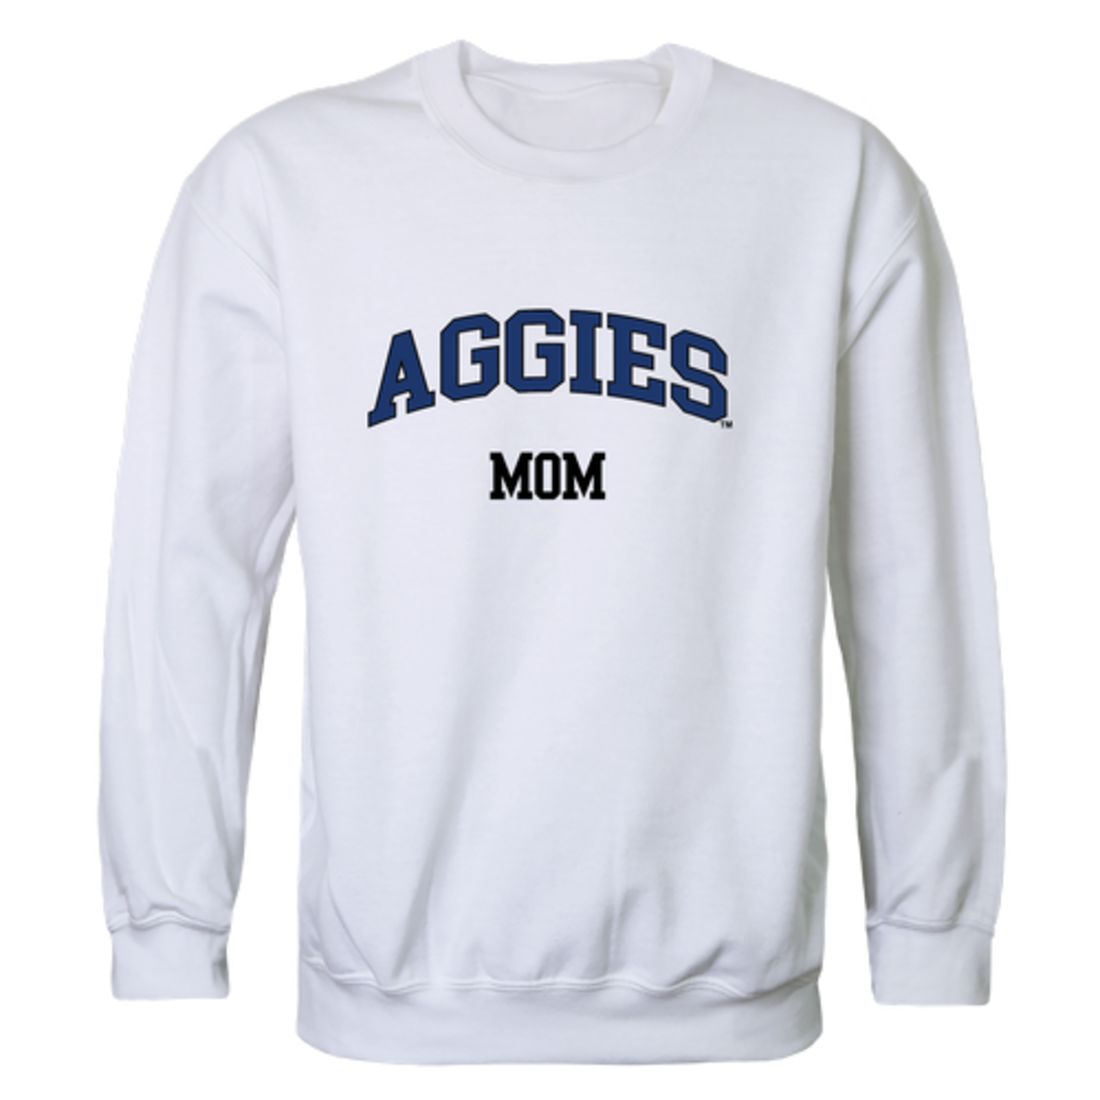 North Carolina A&T State University Aggies Mom Fleece Crewneck Pullover Sweatshirt